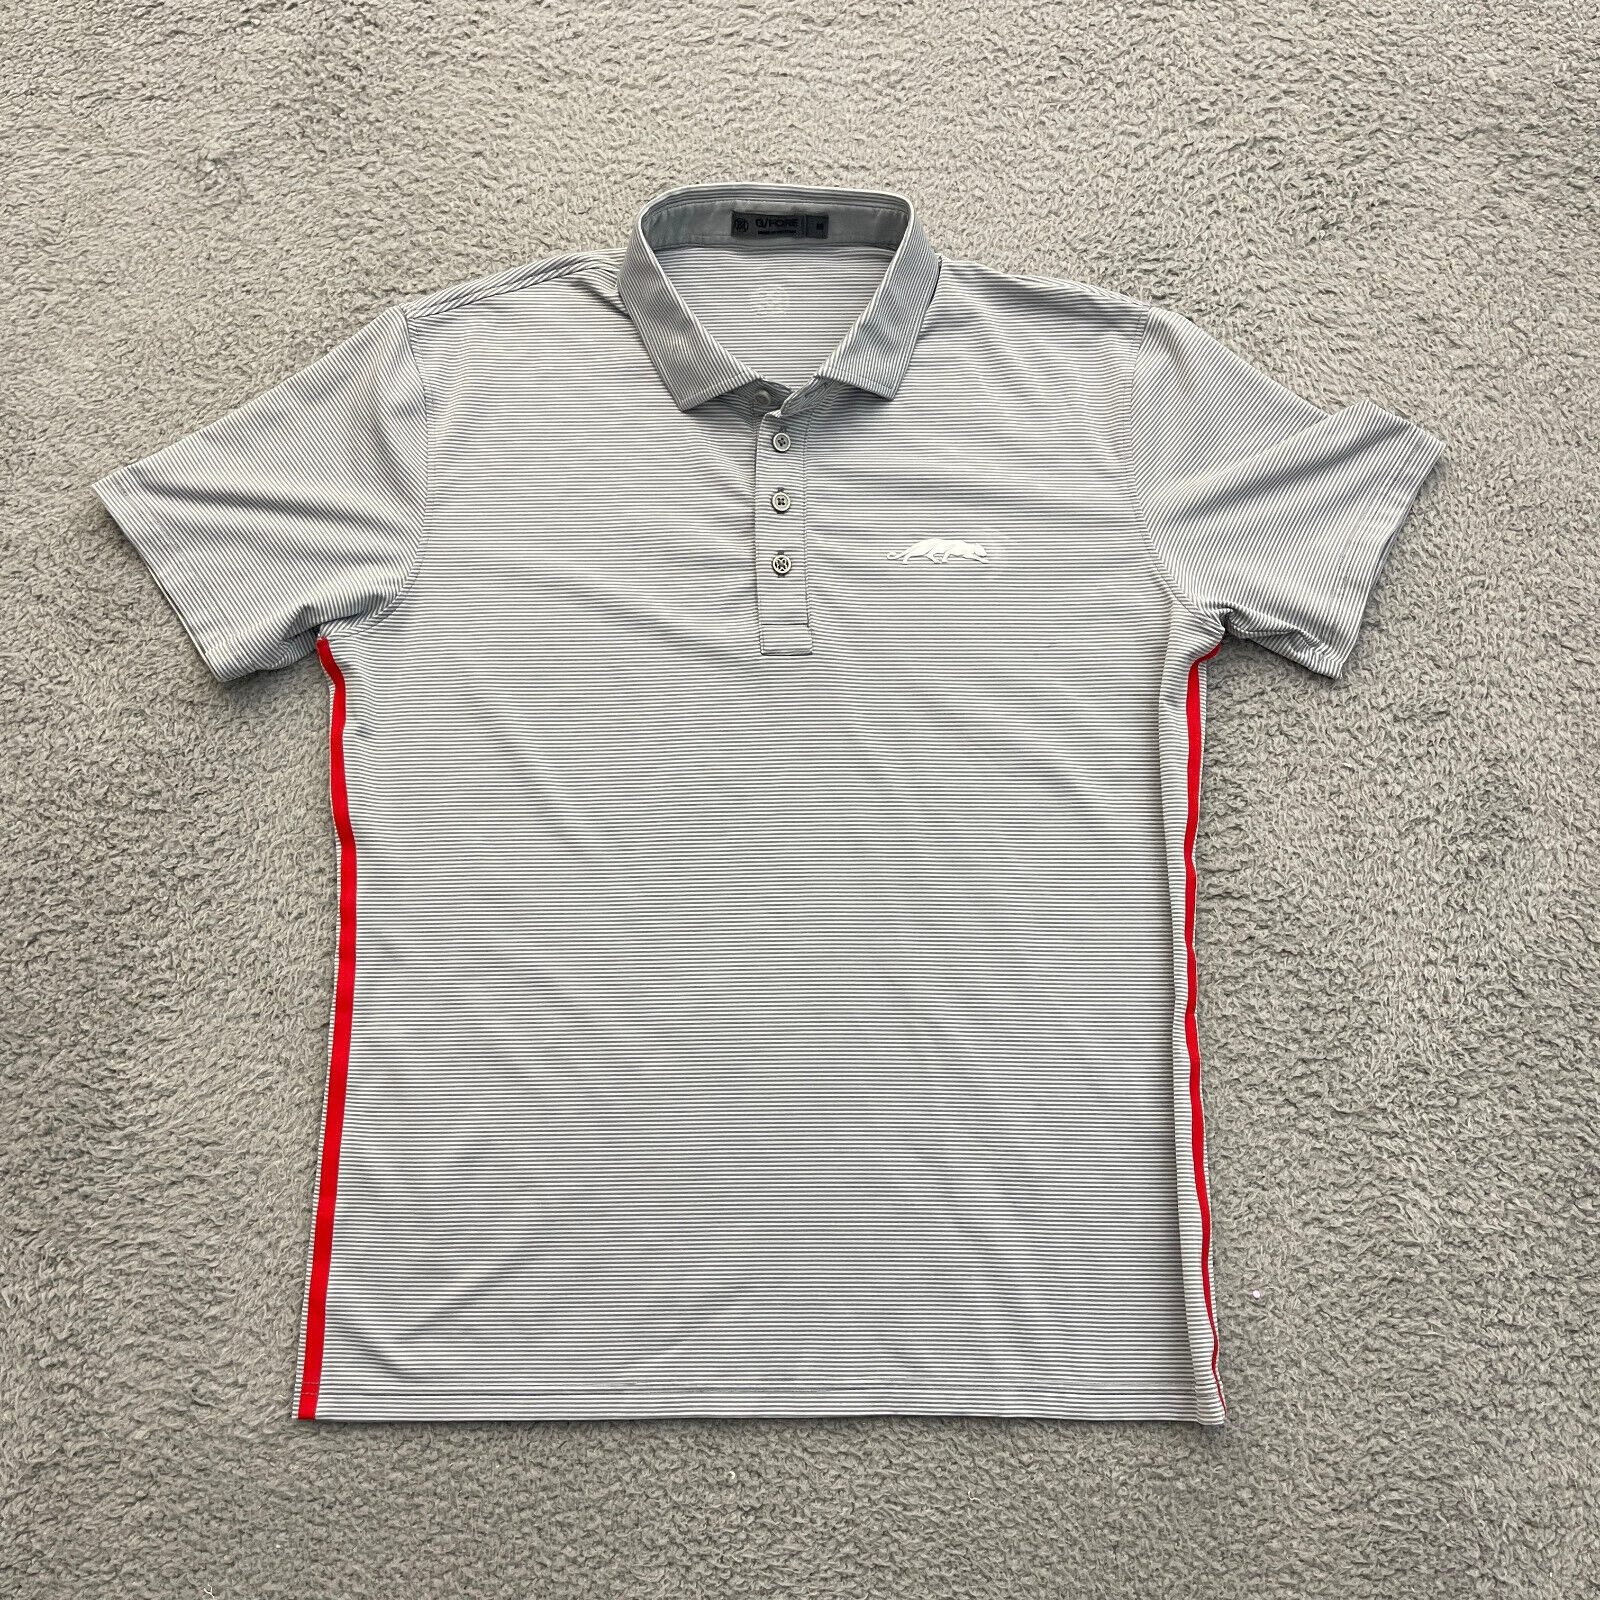 G/FORE Golf Polo Shirt Mens Medium Grey White Striped Performance Stretch Casual